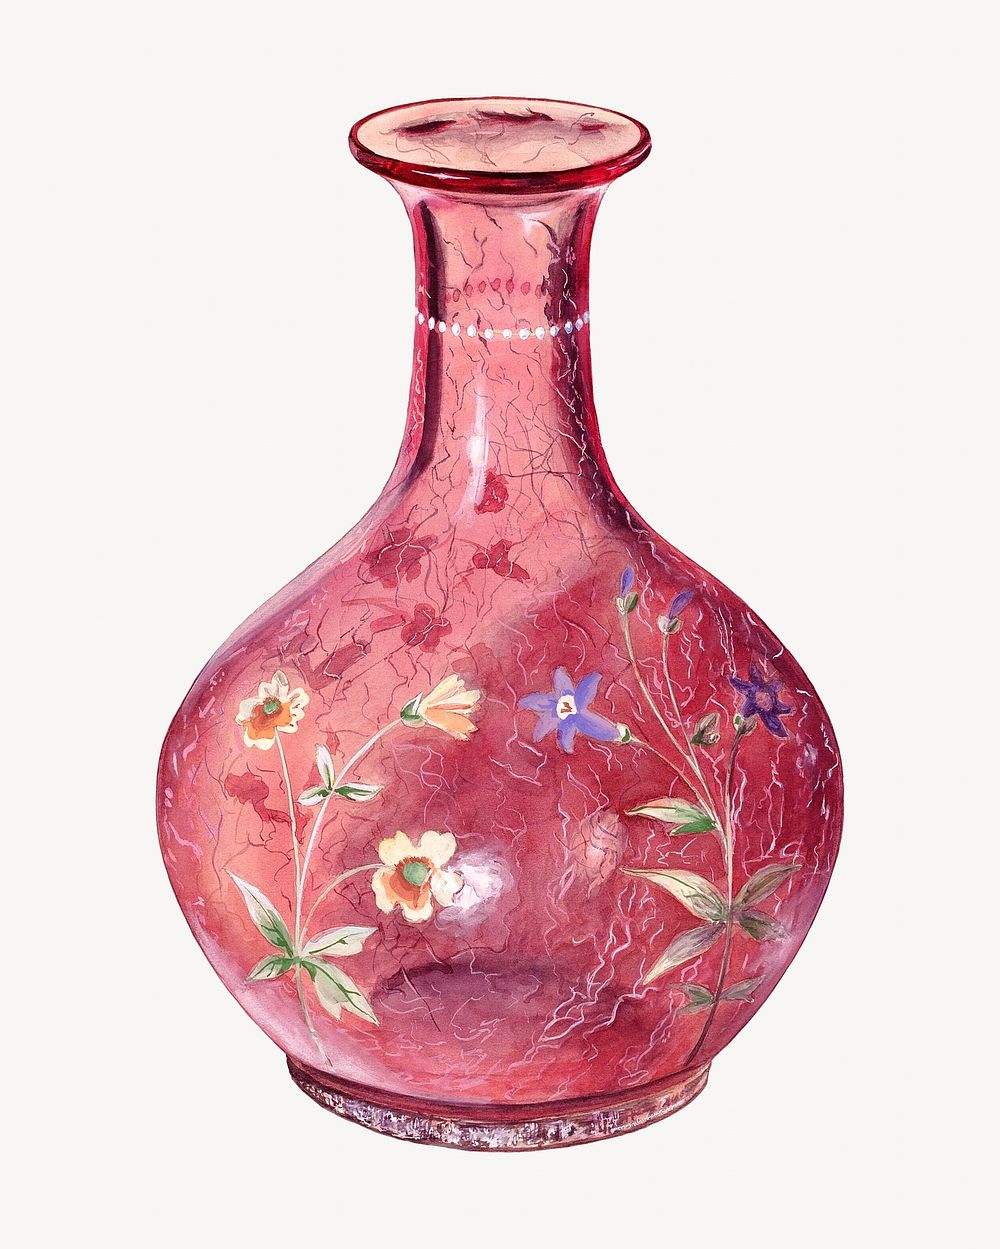 Red China vase isolated vintage object on white background